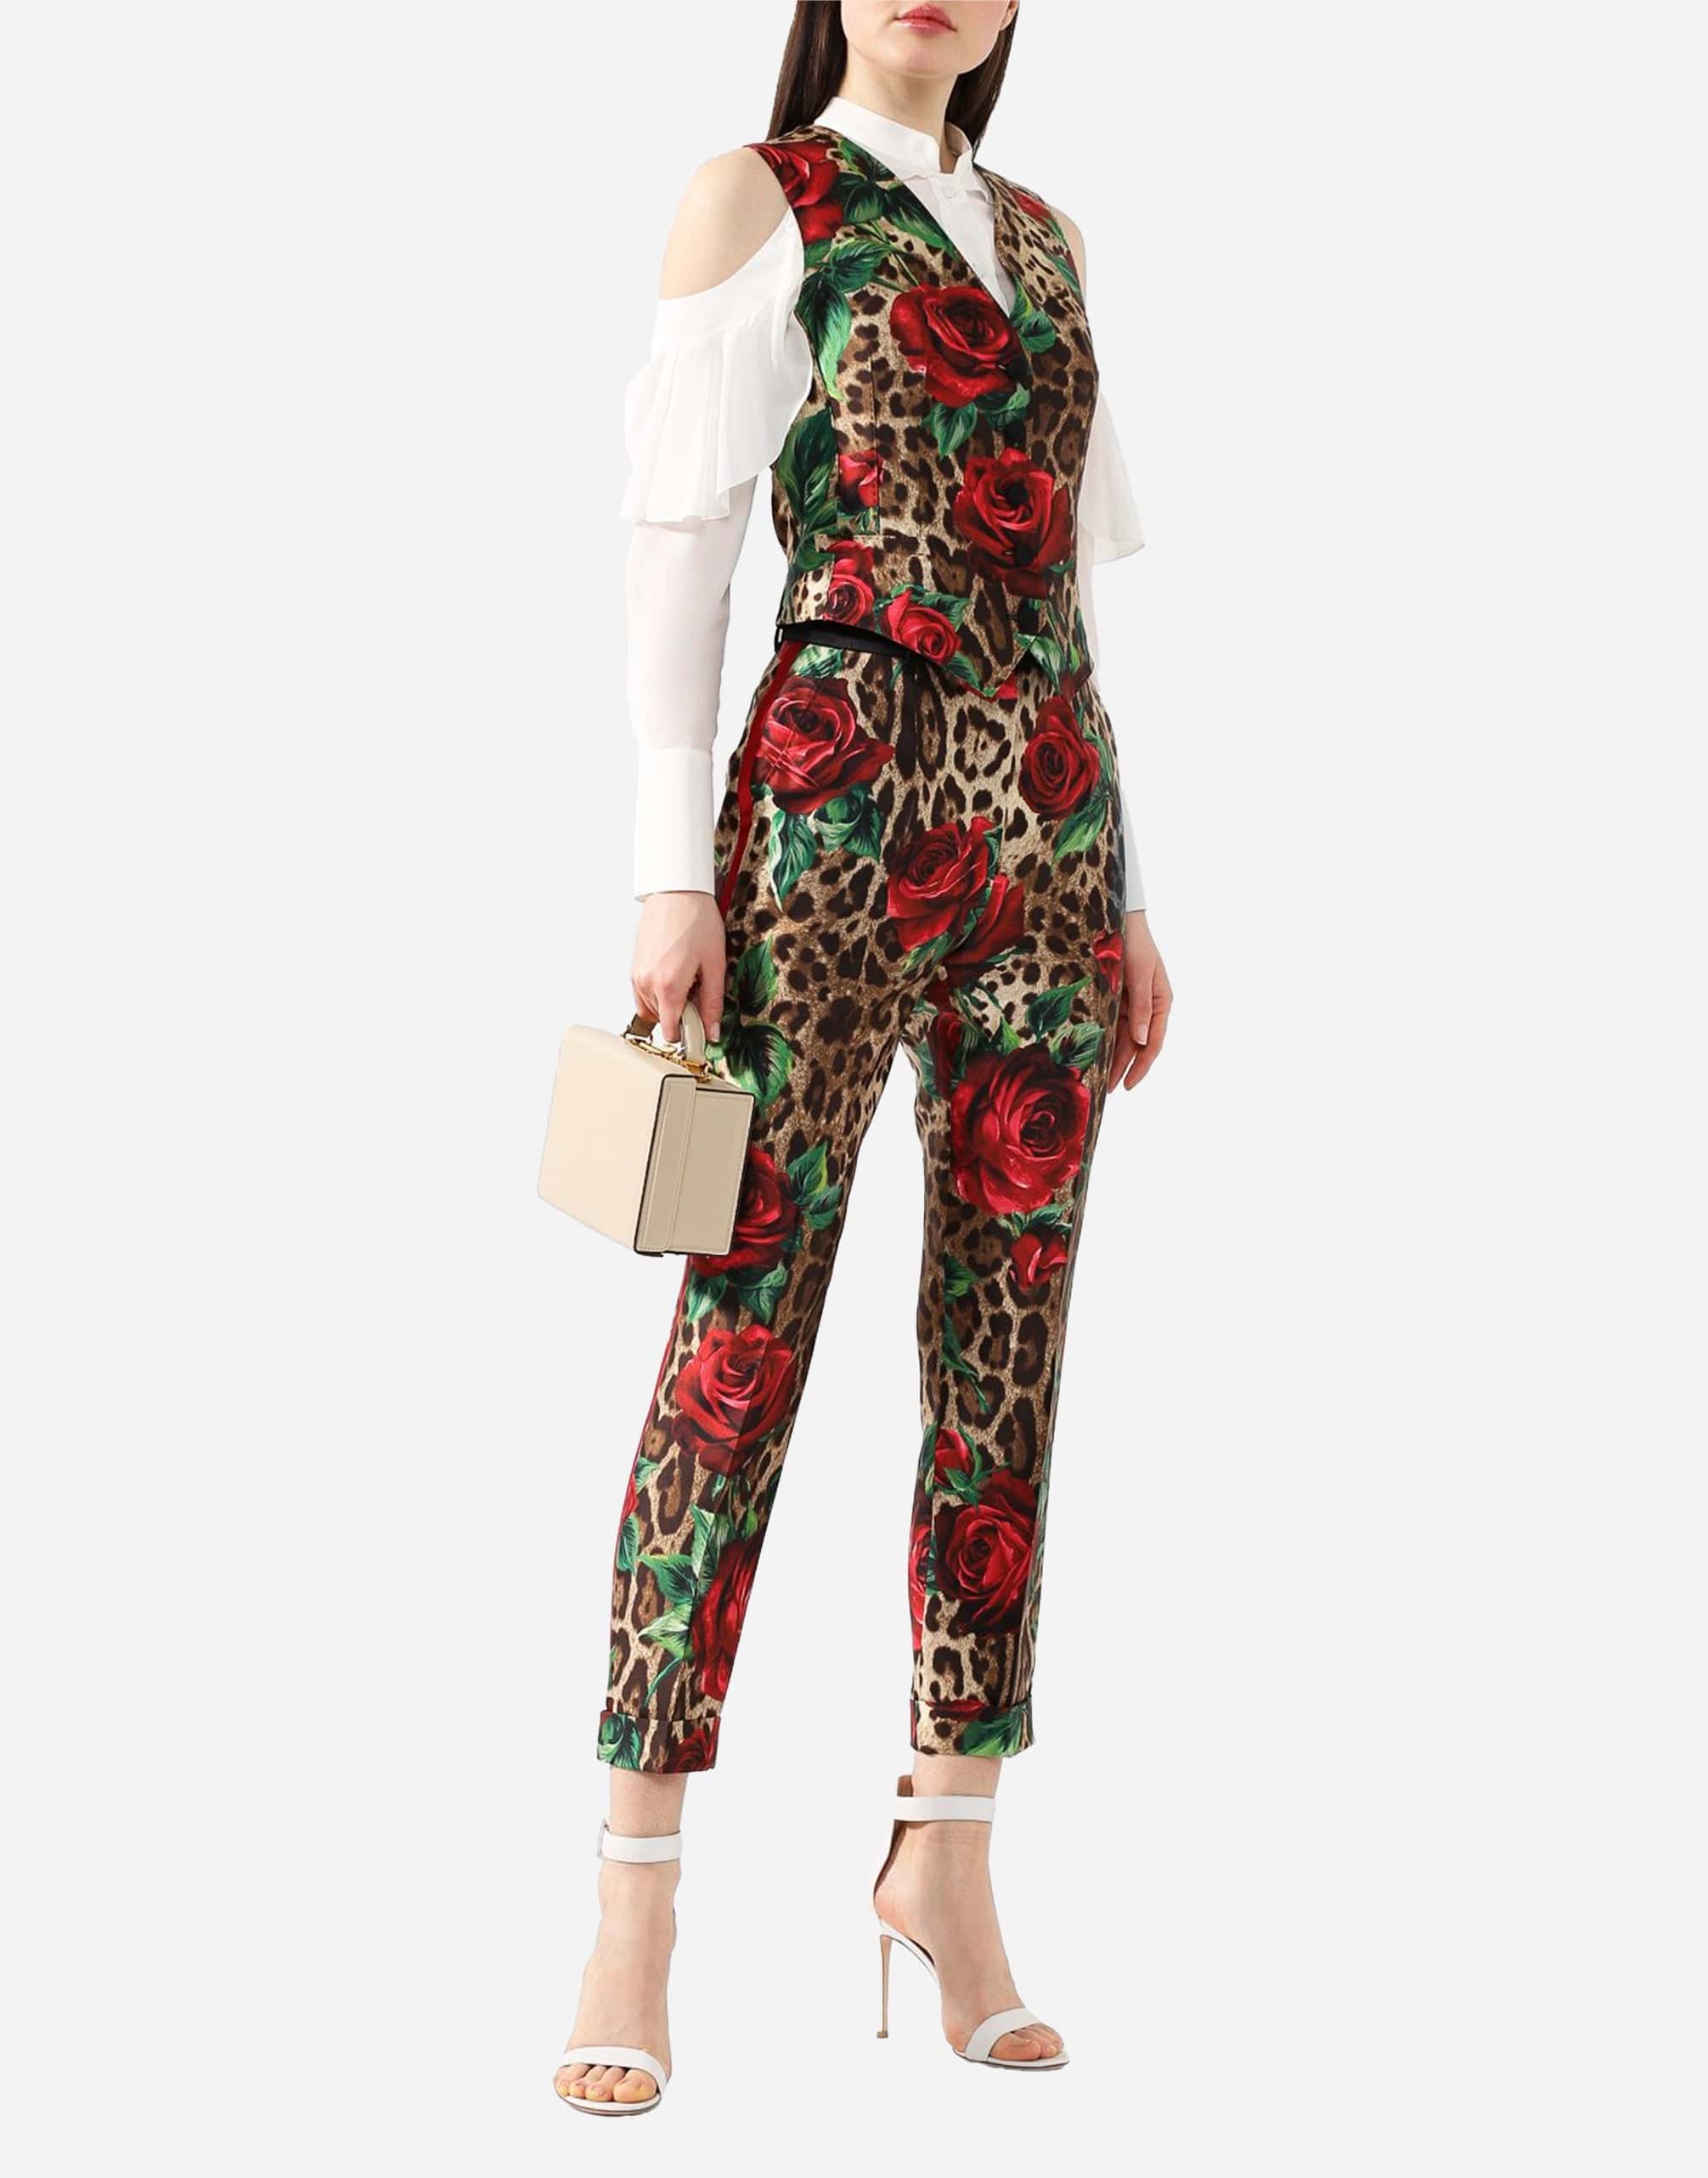 Dolce & Gabbana Leopard Print Vest